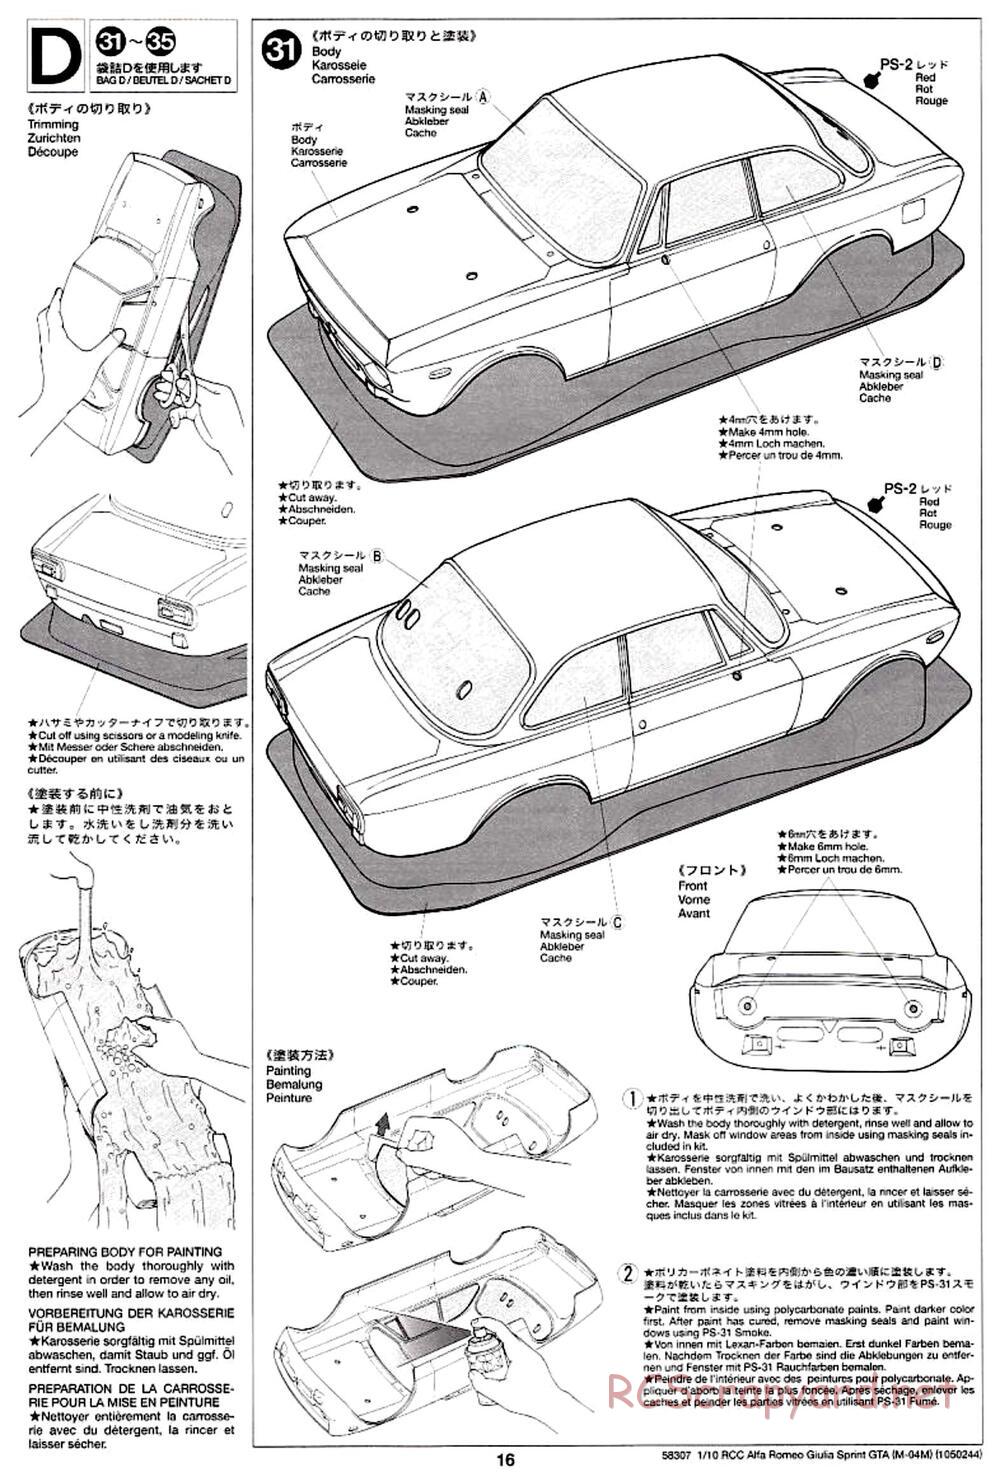 Tamiya - Alfa Romeo Giulia Sprint GTA - M04M Chassis - Manual - Page 16